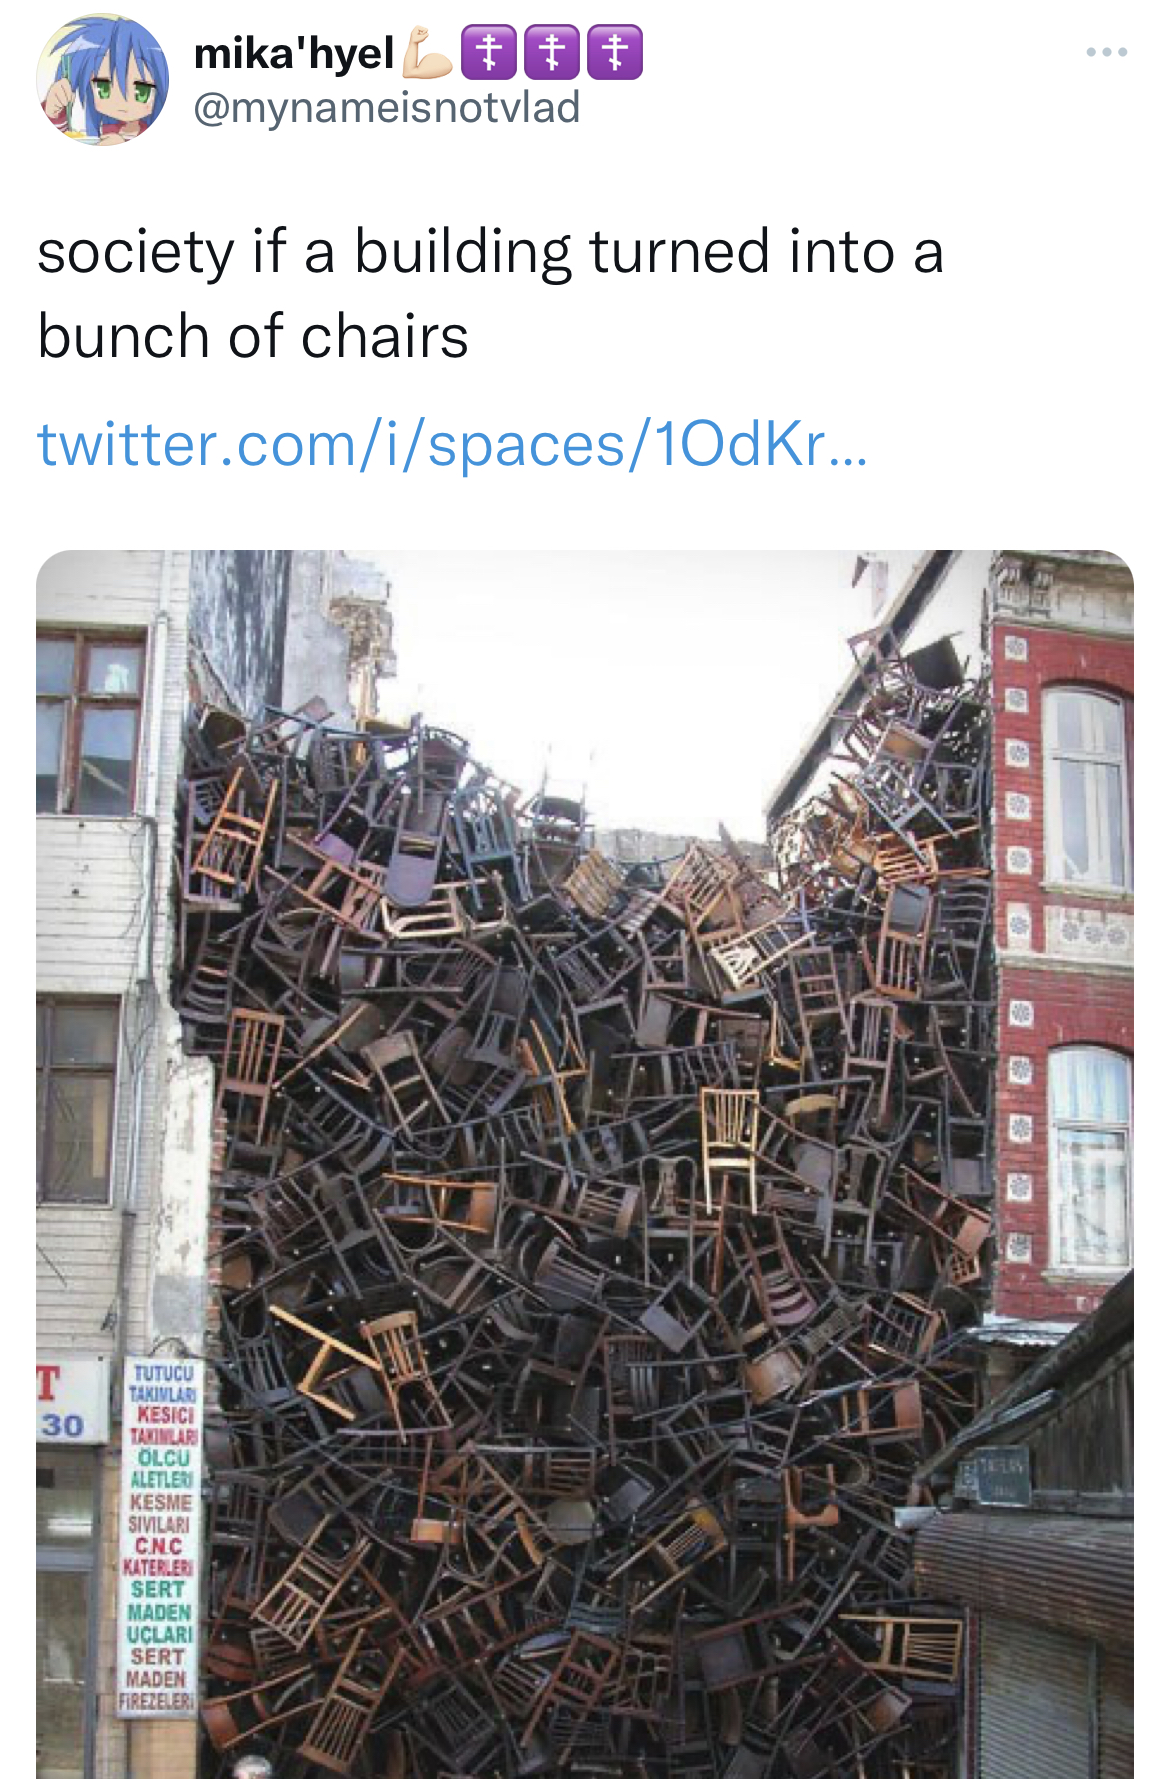 savage and absurd tweets - doris salcedo - society if a building turned into a bunch of chairs twitter.comispaces10dKr... 30 Staflar Olou Alon Kesme Chc Kator mika'hyel # Sert Maden Uclari Sert Waden Freser